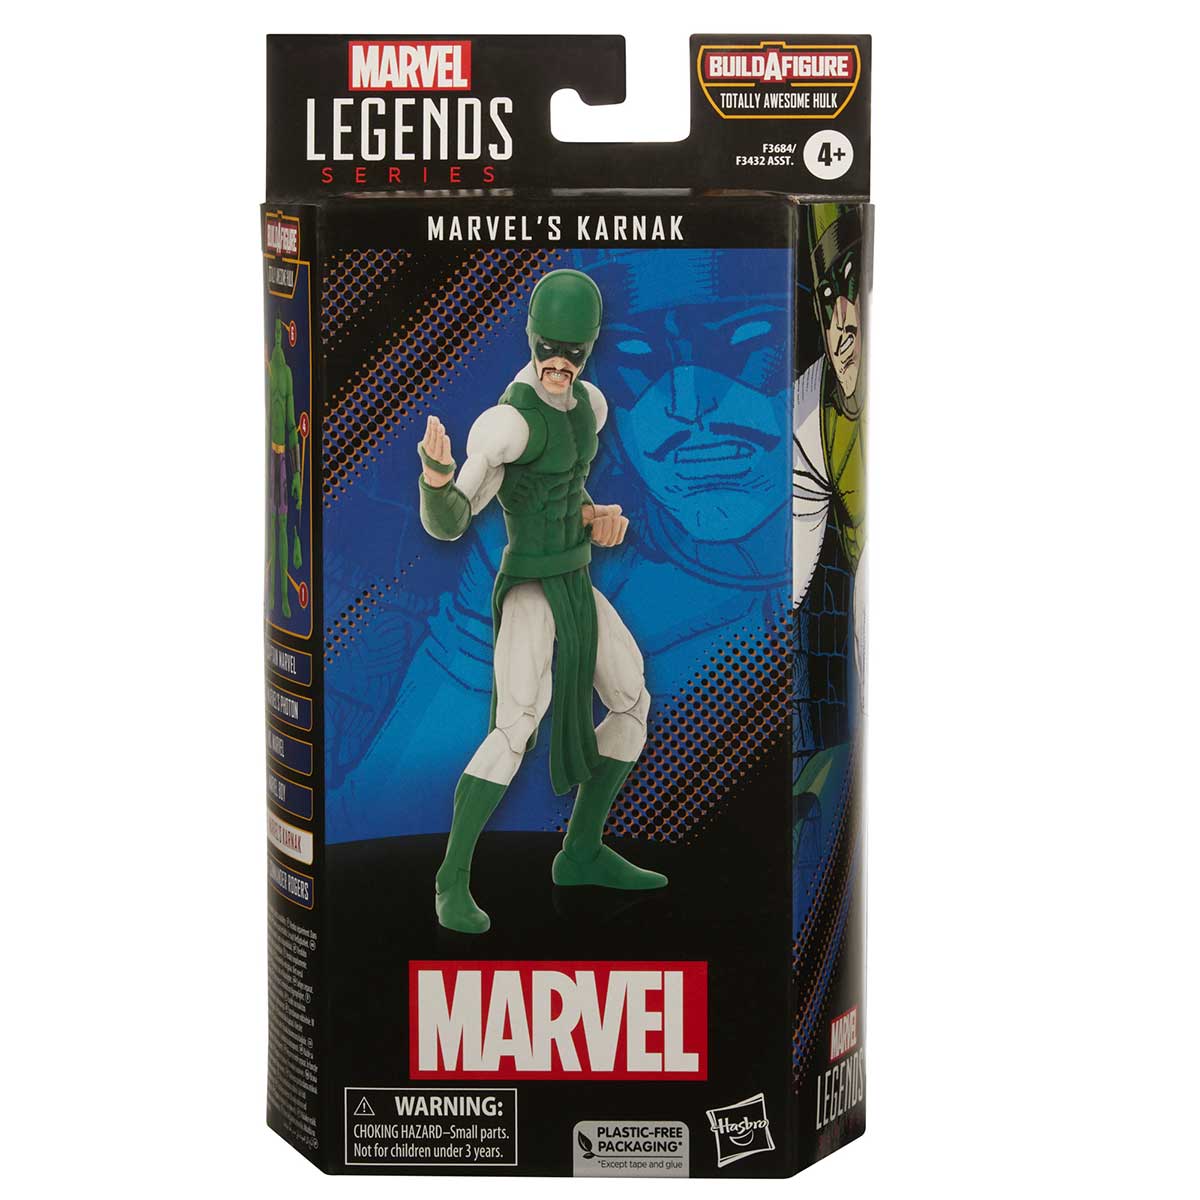 The Marvels Marvel Legends Collection Commander Rogers 6-Inch